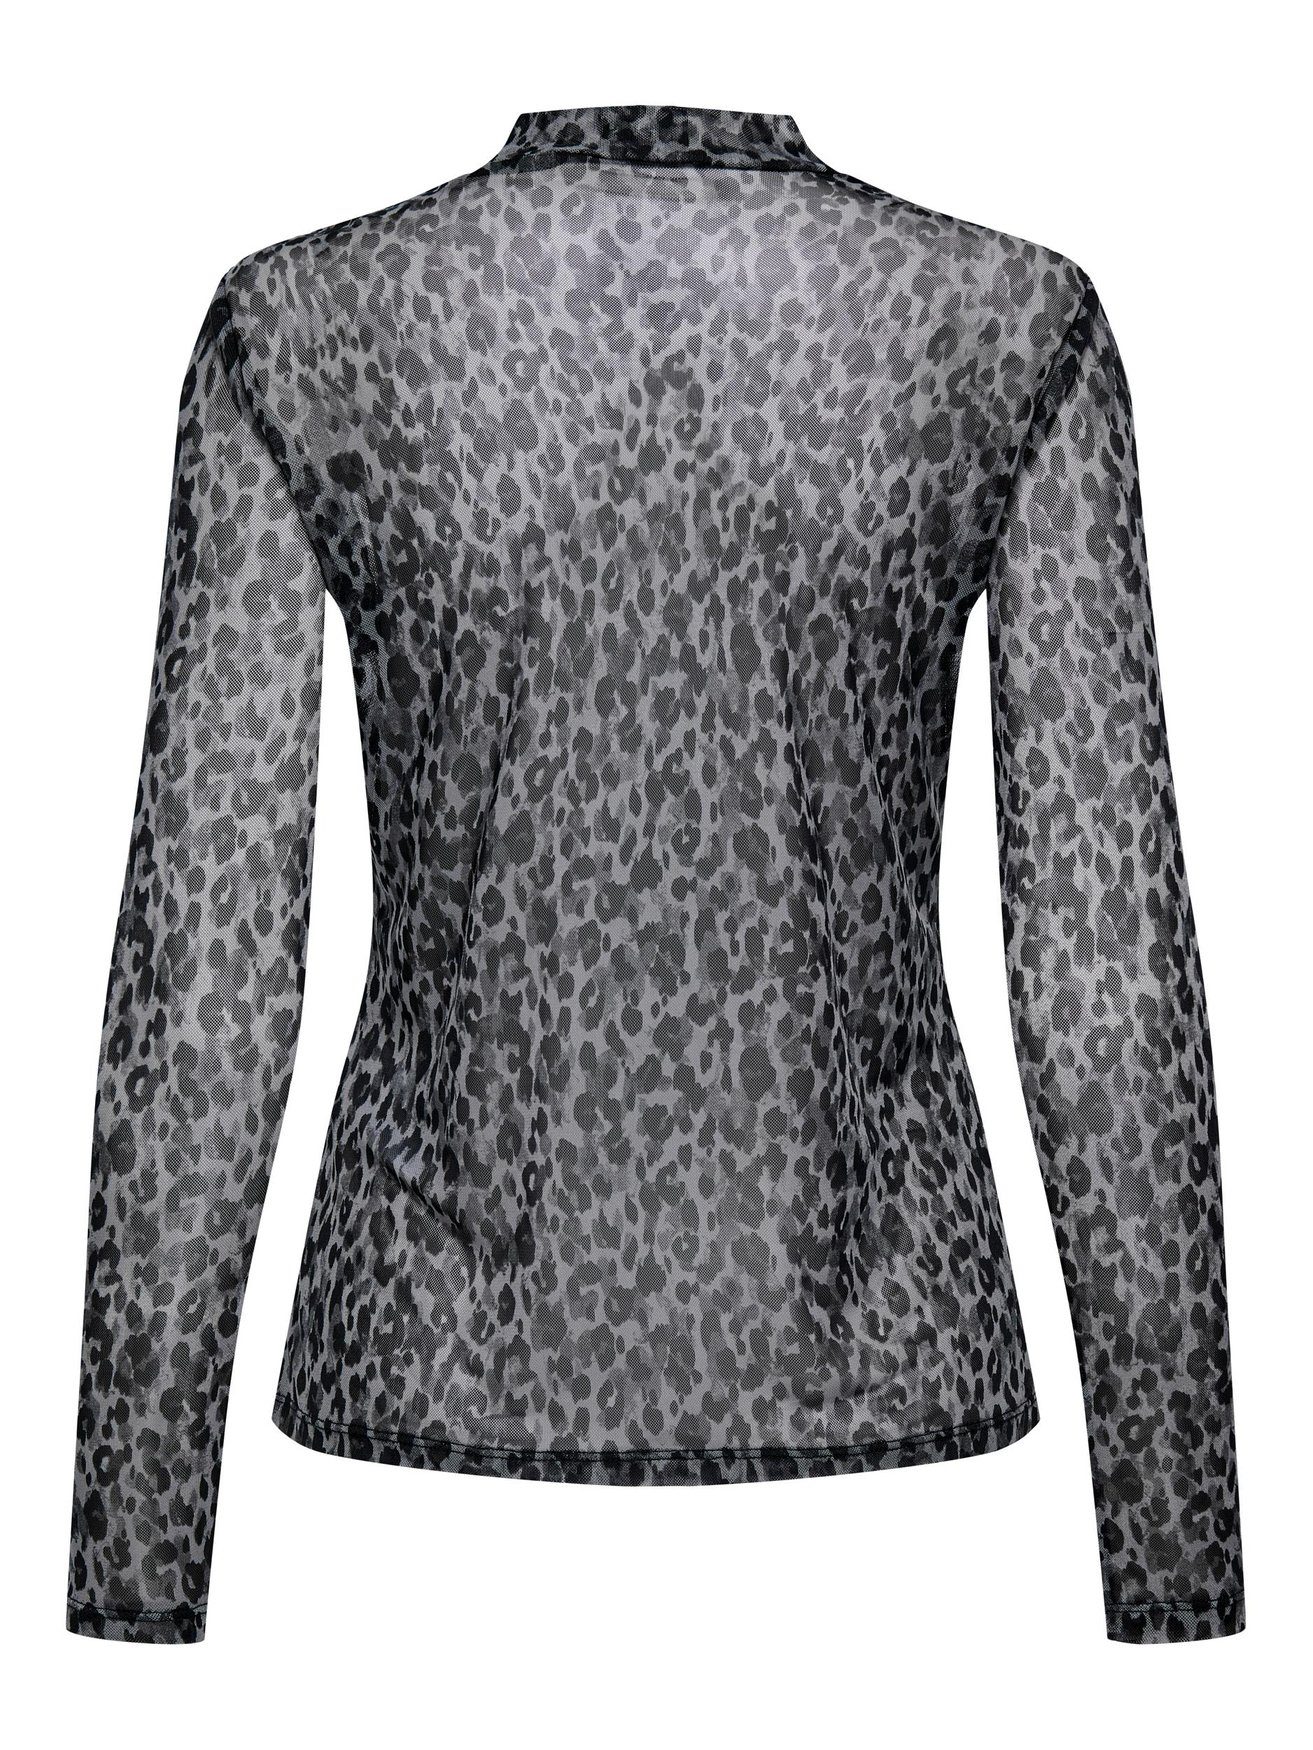 YONG Mesh Shirt Transparentes in Animal Beige-Schwarz Print JDYELSA Langarm de JACQUELINE T-Shirt Top 5636